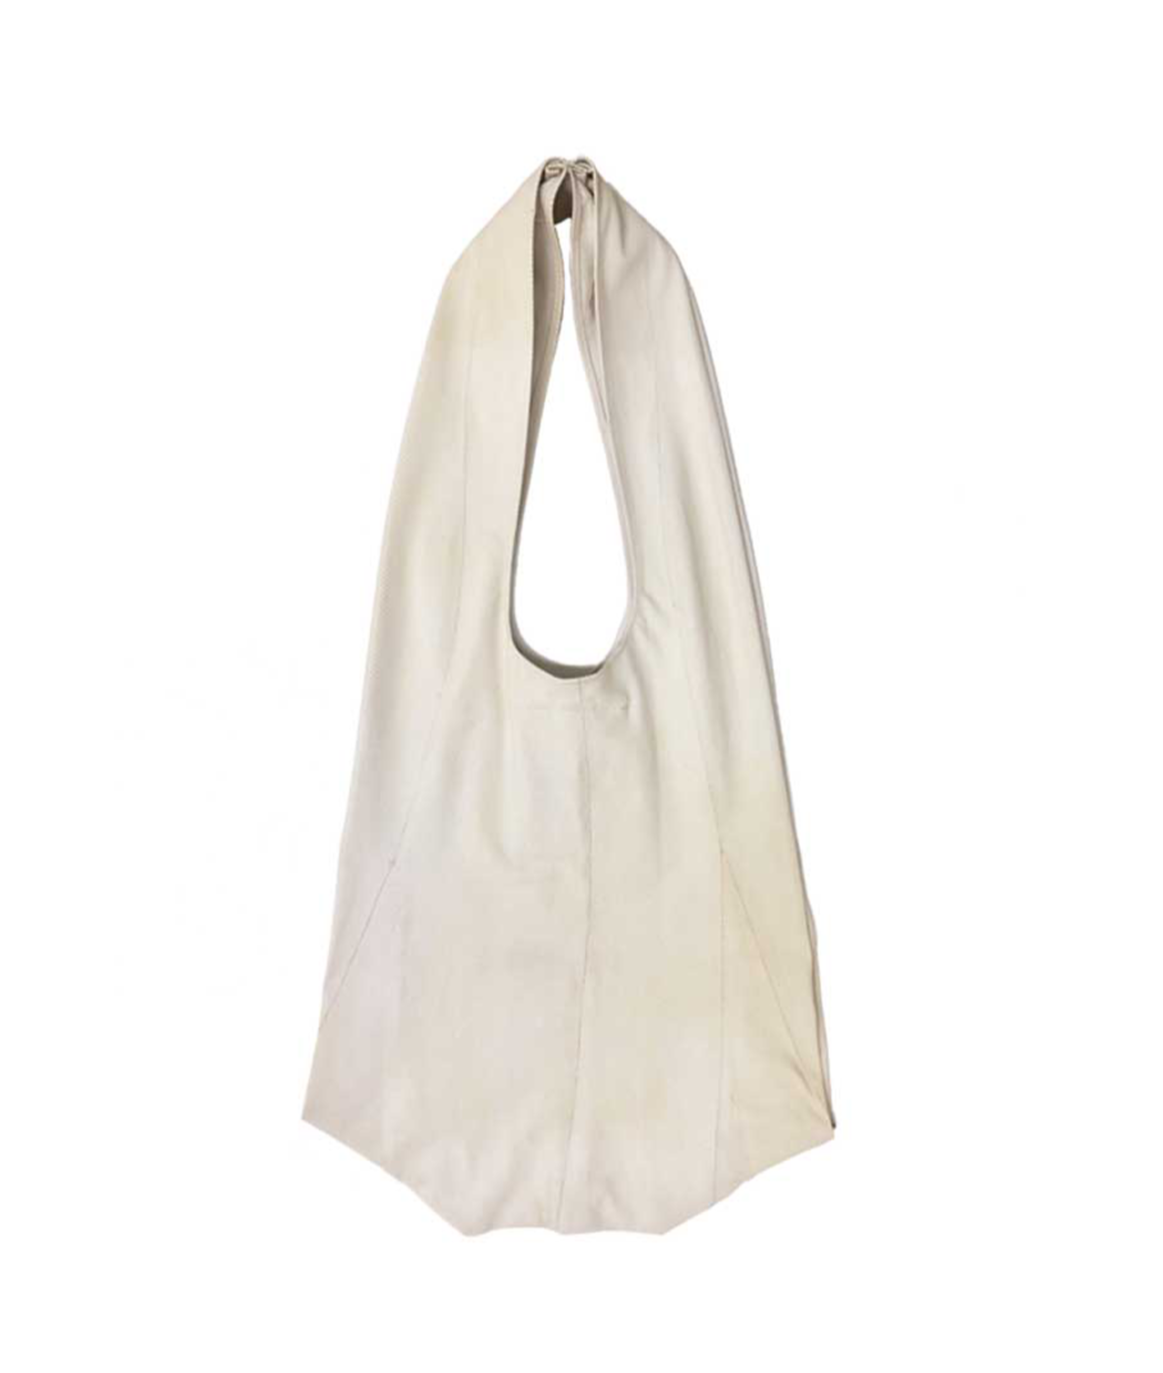 Beige acrochordus snakeskin tote bag with wide shoulder strap